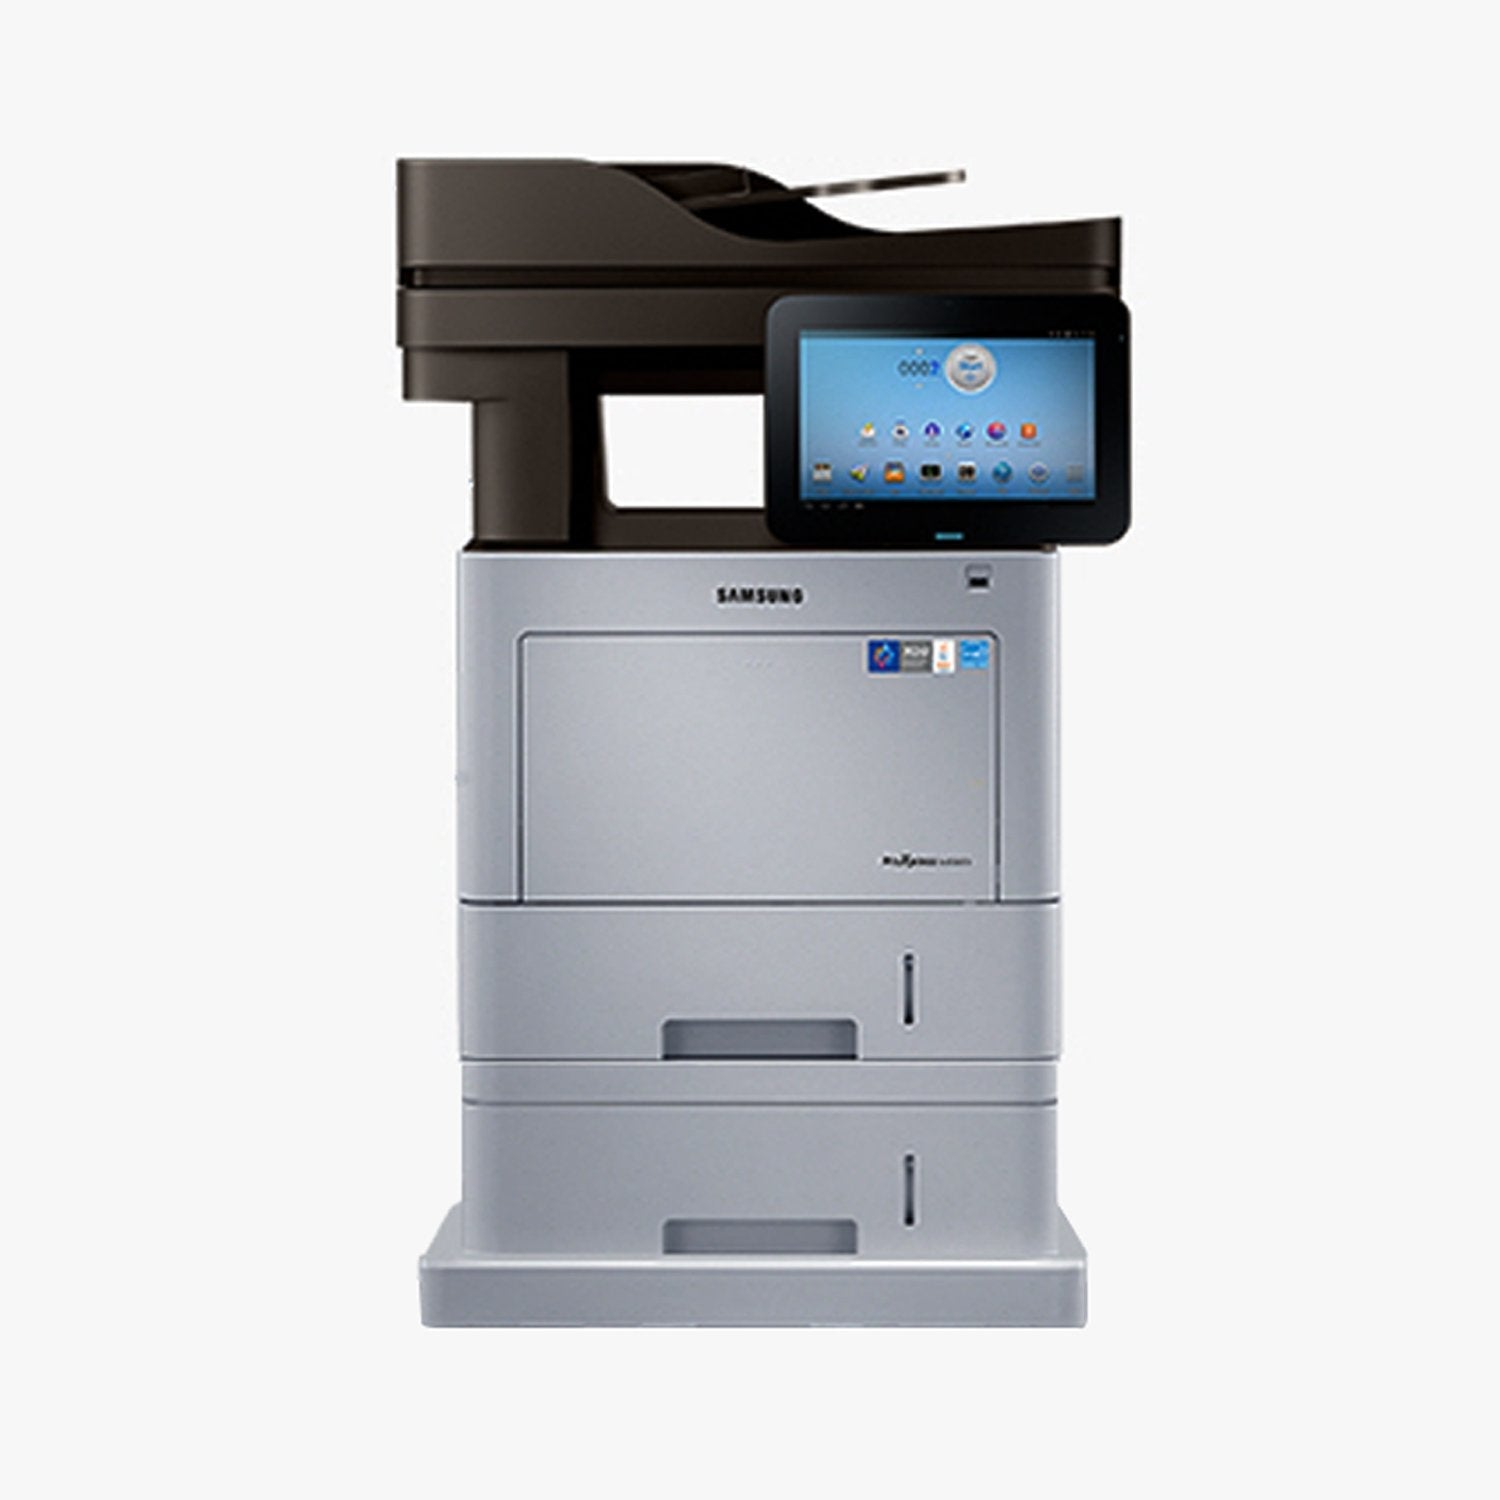 Absolute Toner Samsung ProXpress SL-M4580FX Monochrome Multifunction Laser Printer Copier For Office - $25/month Laser Printer